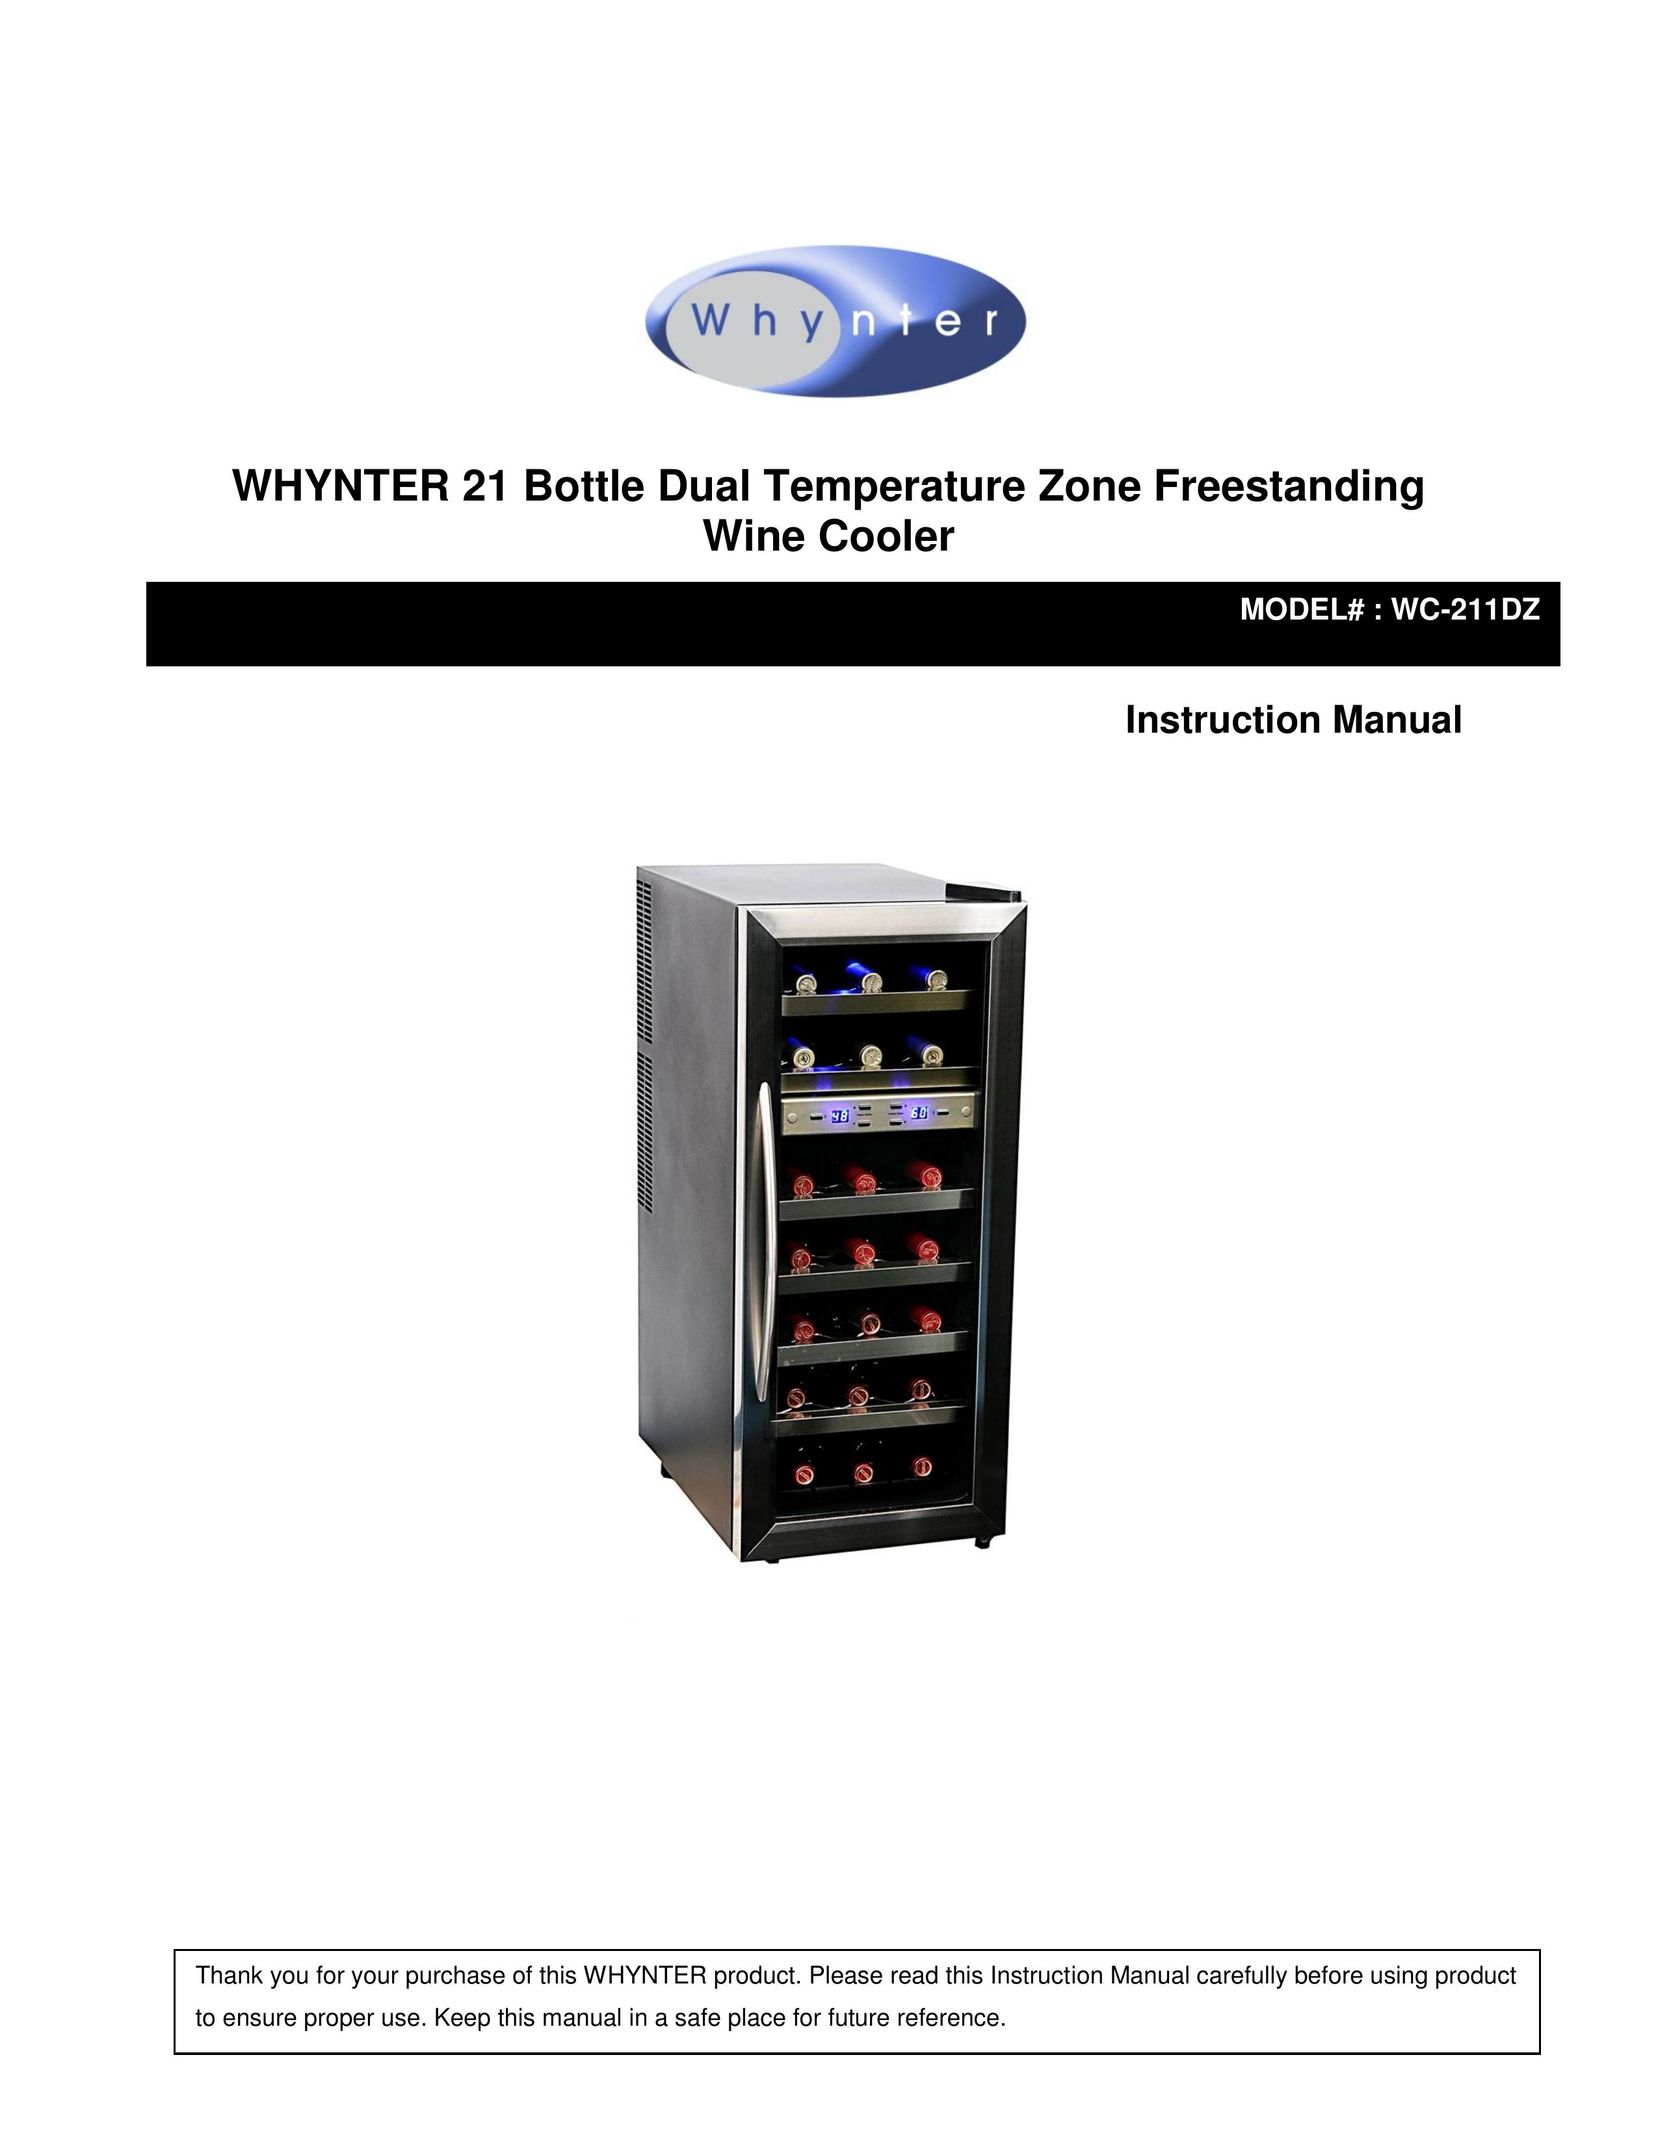 Whynter WC-211DZ Beverage Dispenser User Manual